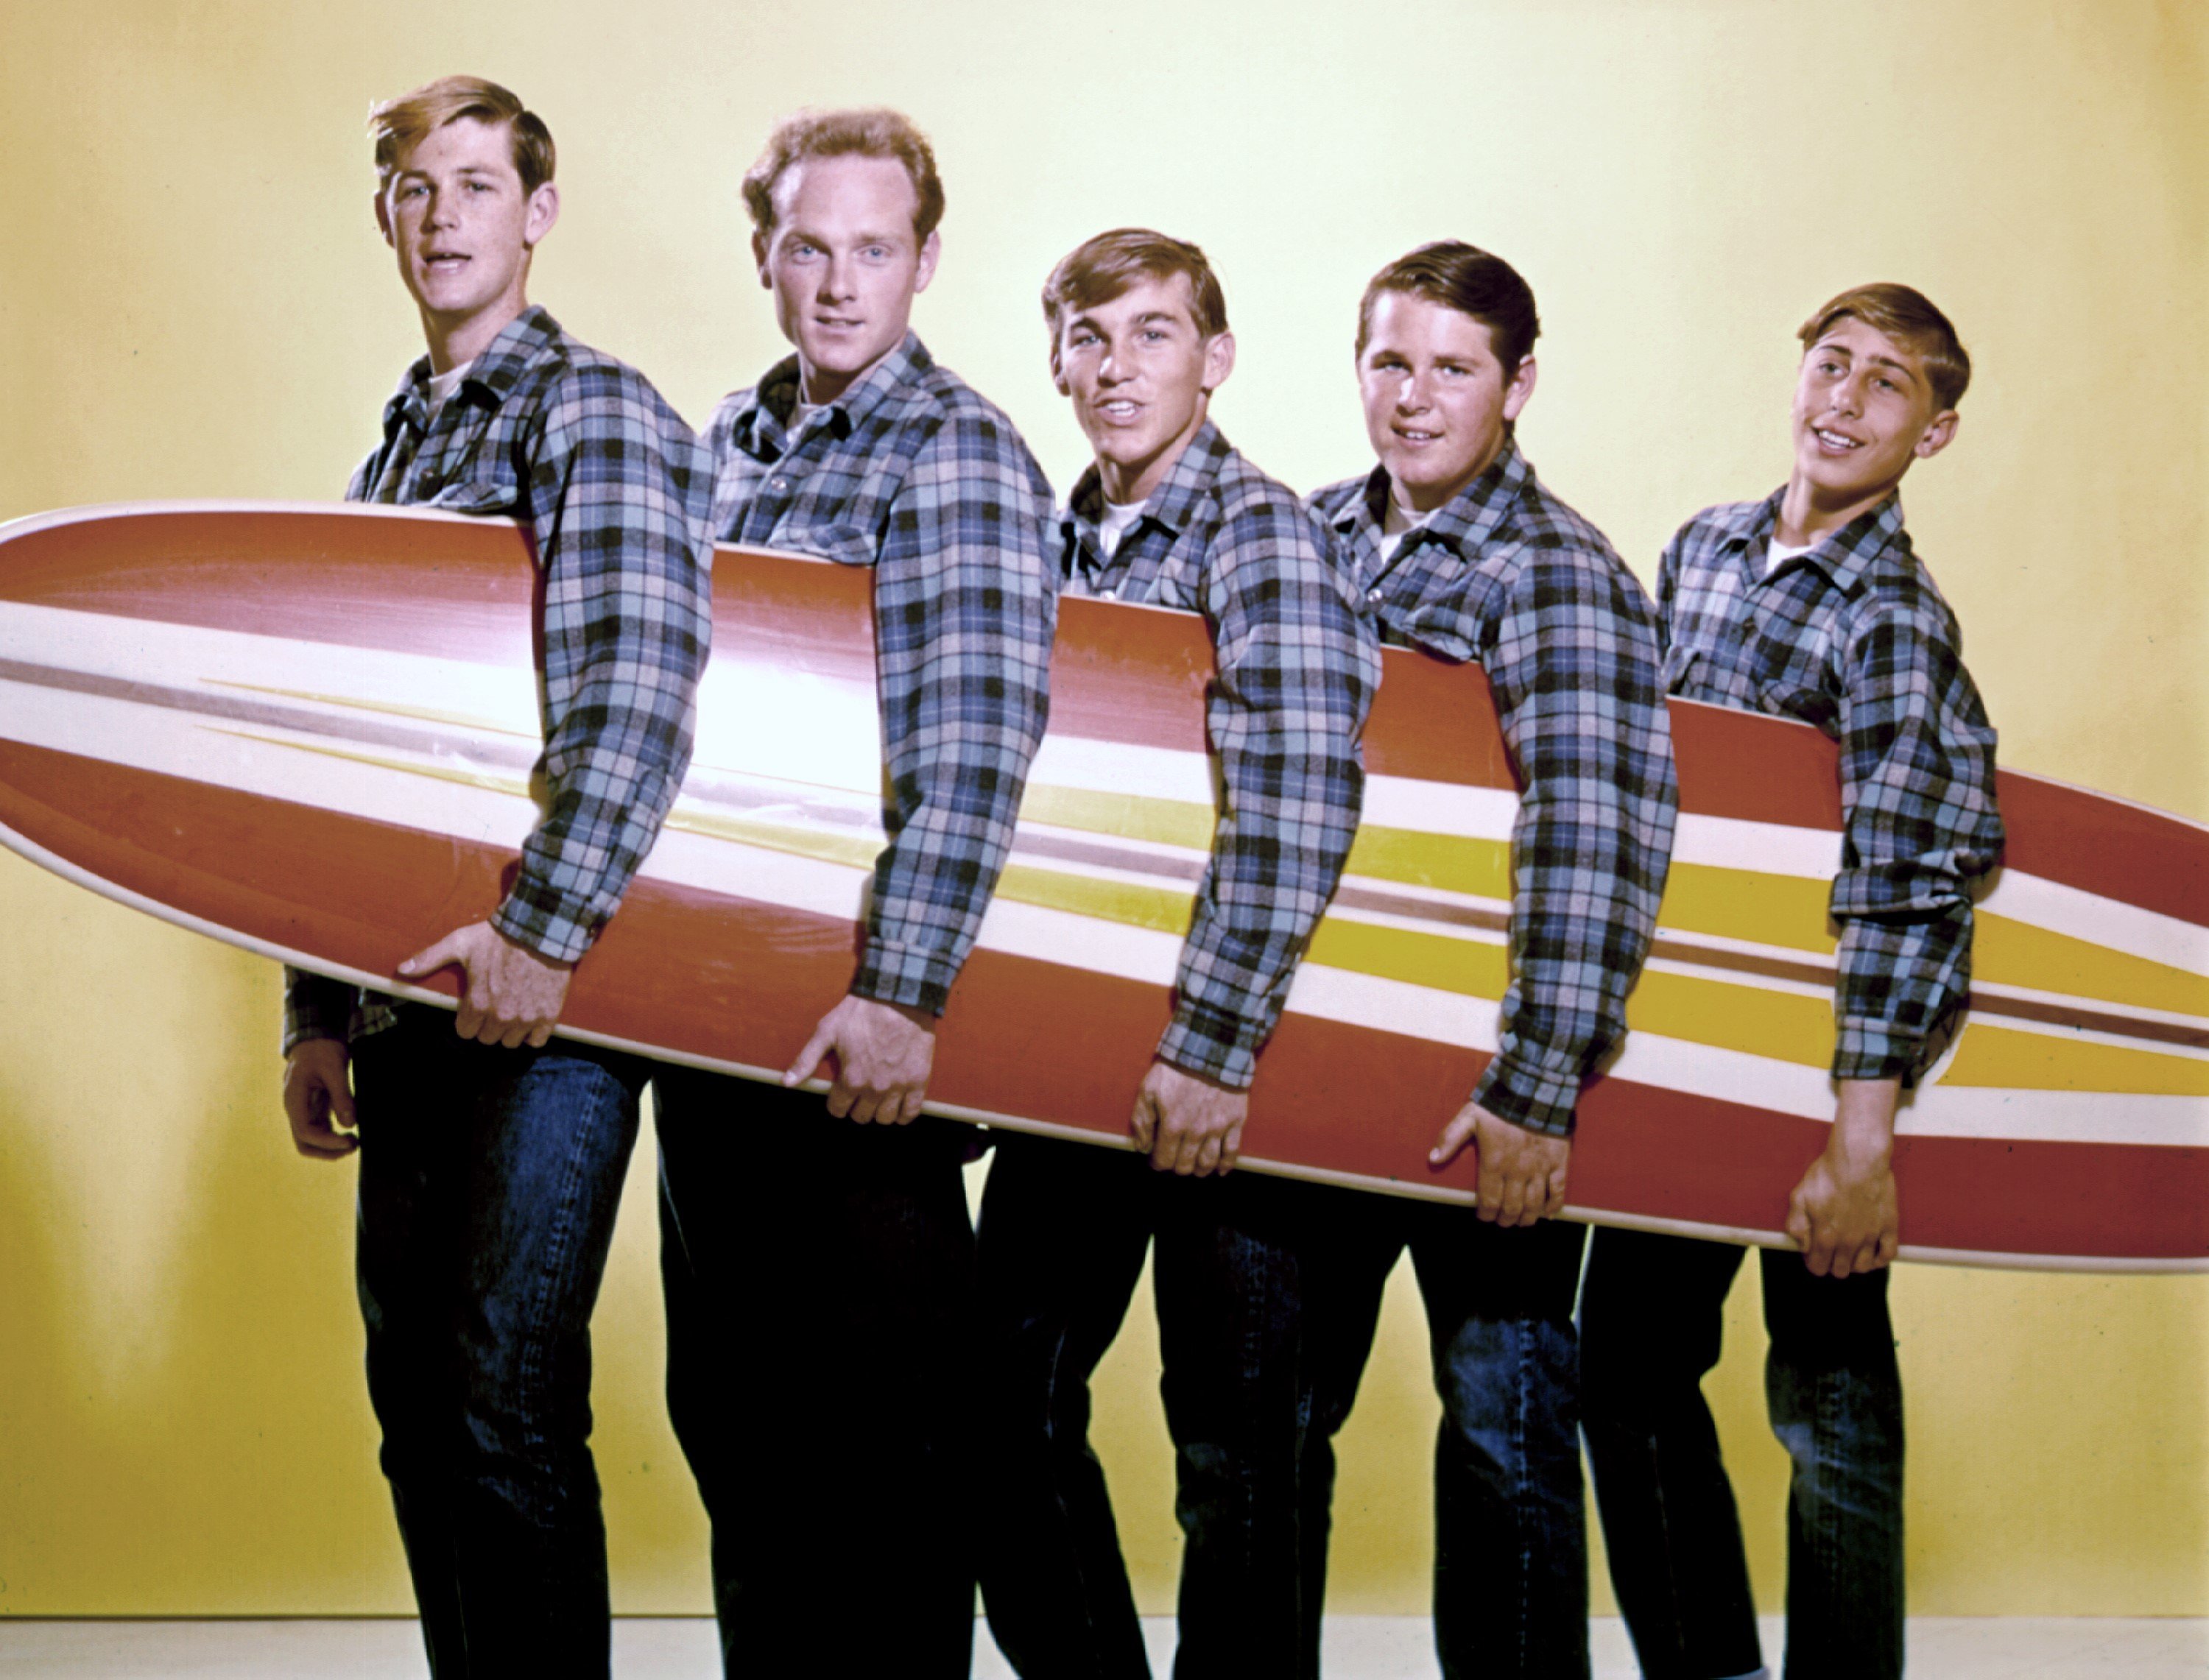 The Beach Boys holding a surf board during the "California Girls" era